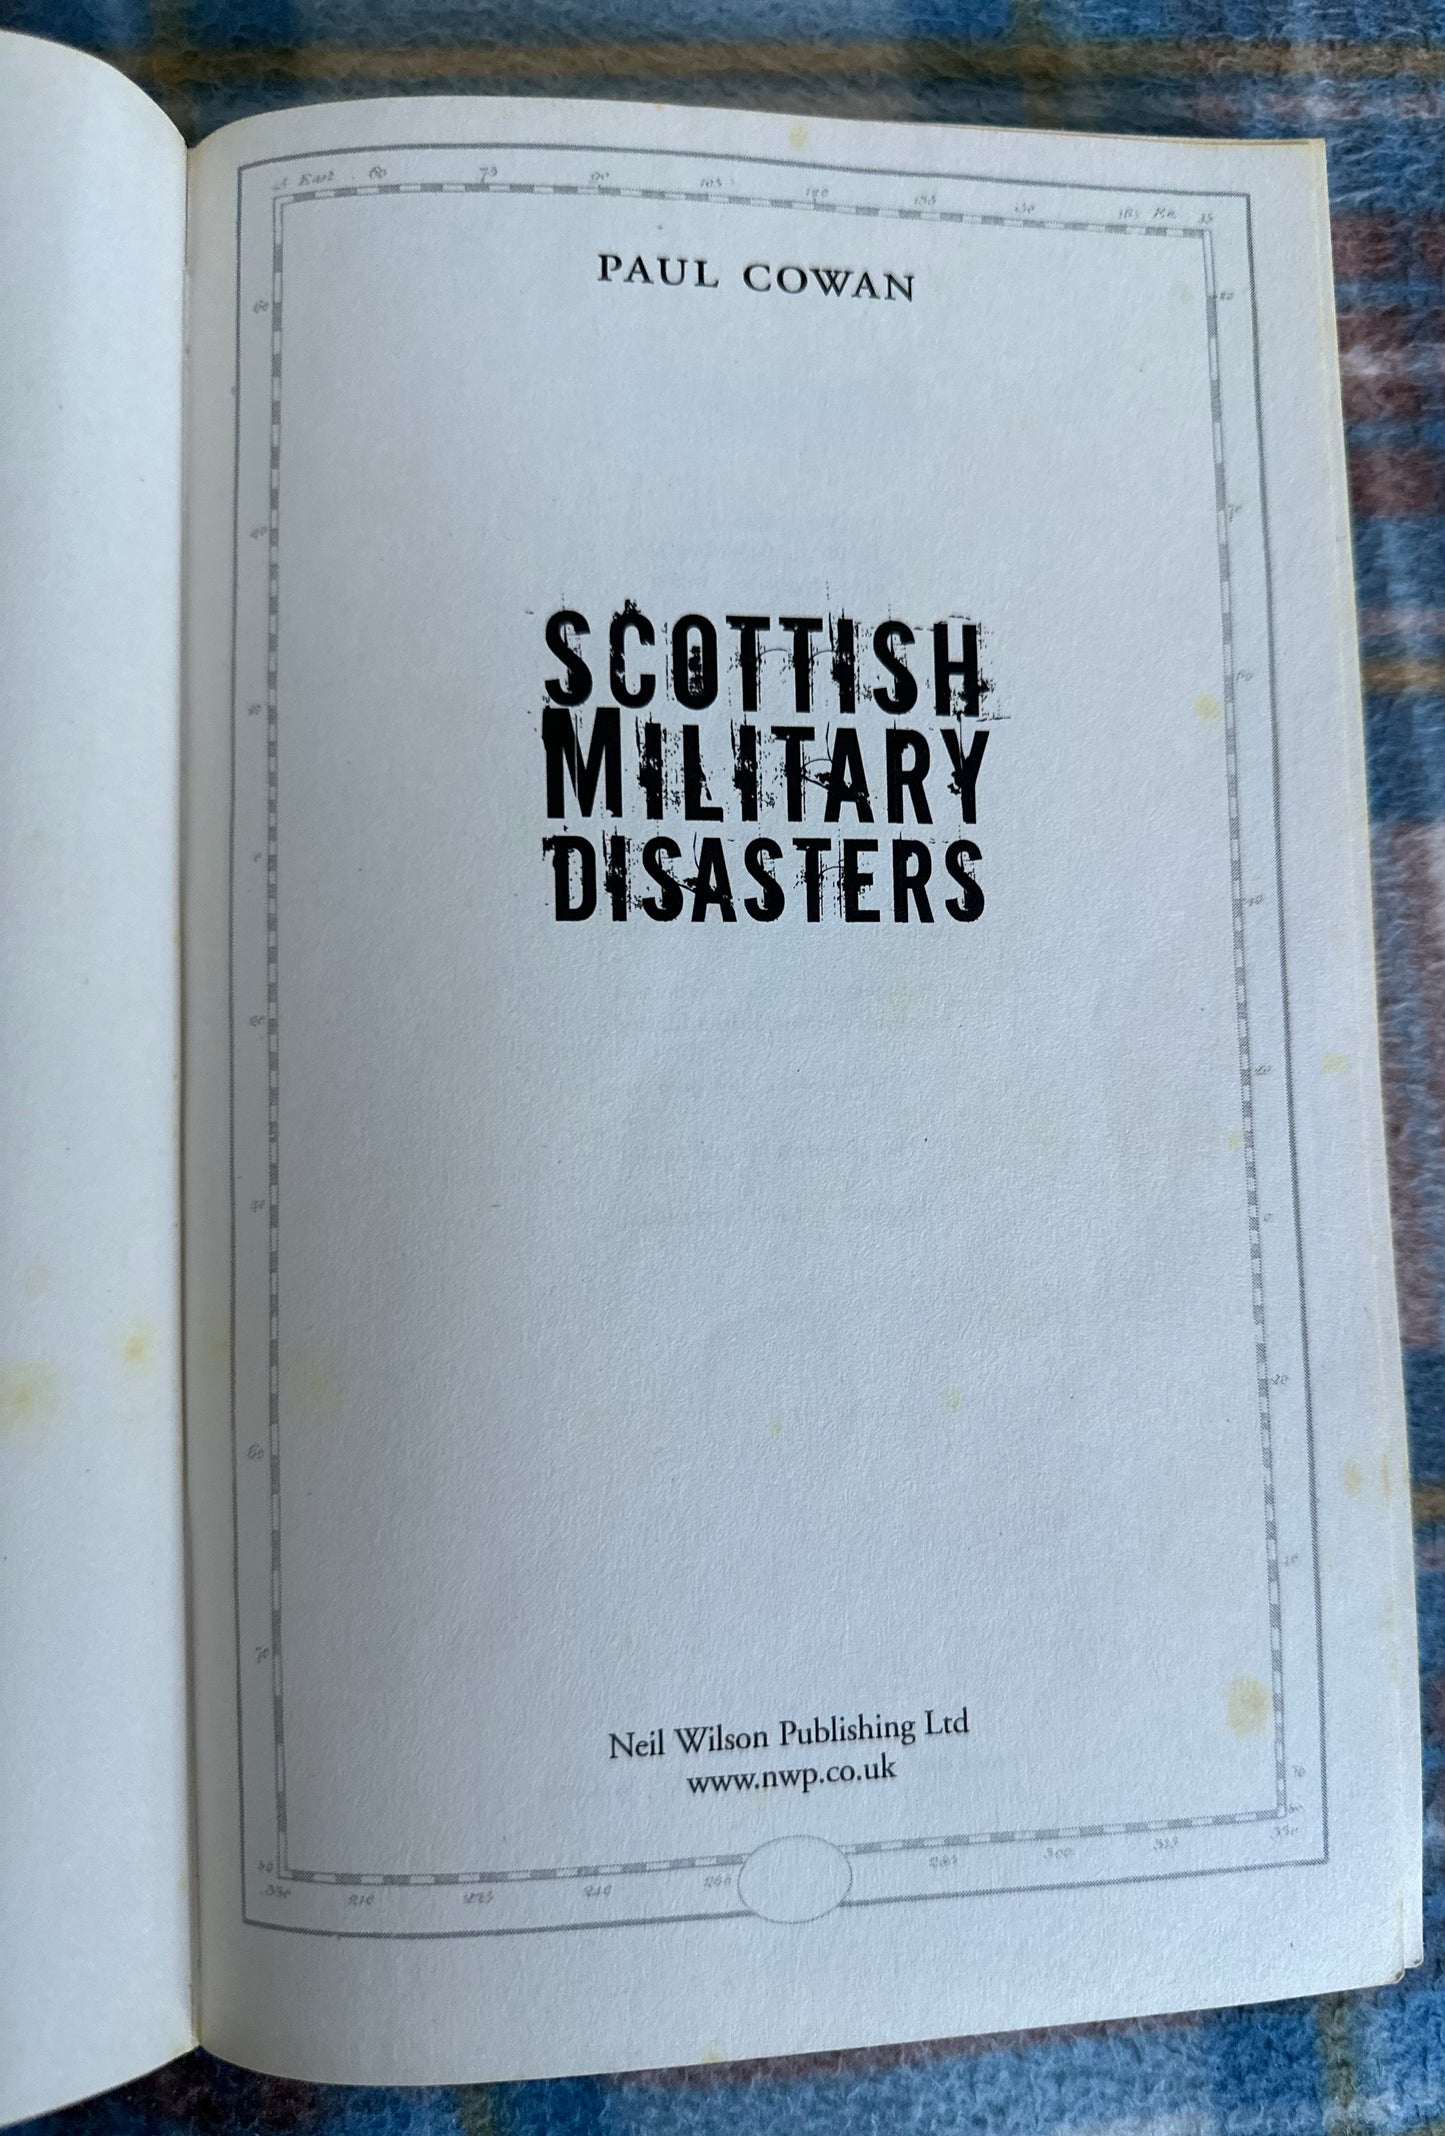 2008*1st* Scottish Military Disasters - Paul Cowan(Neil Wilson Publishing)